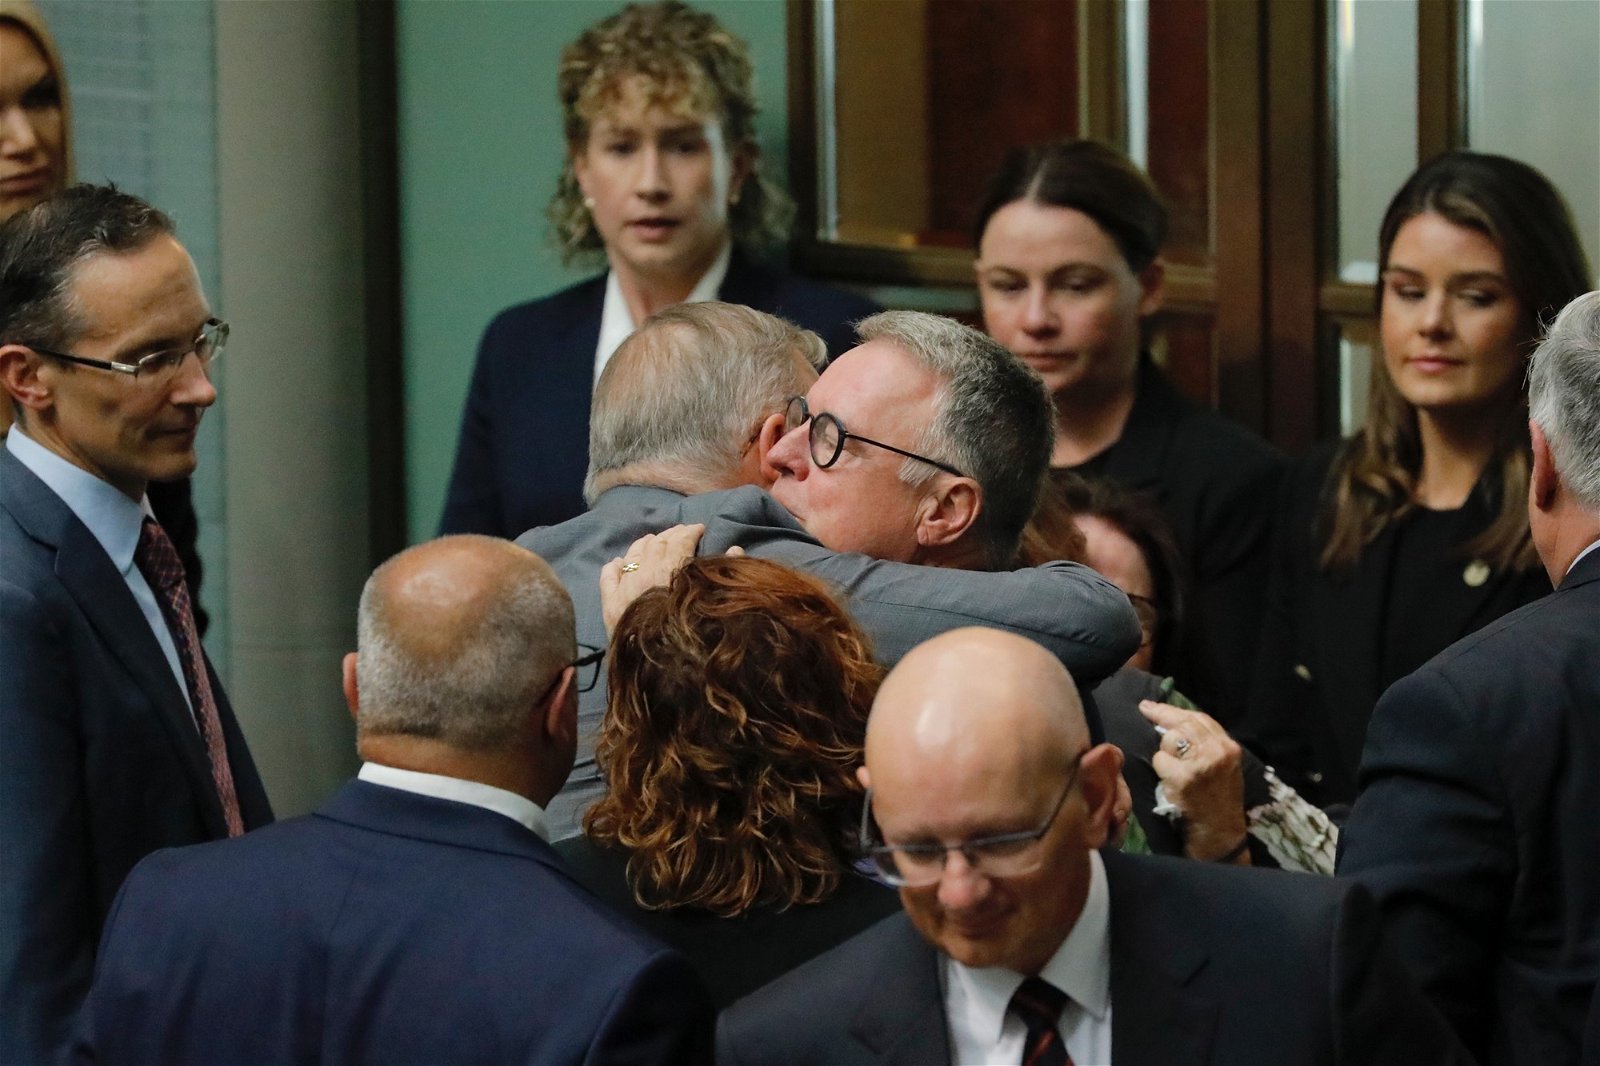 Prime Minister Anthony Albanese and Joel Fitzgibbon hug.